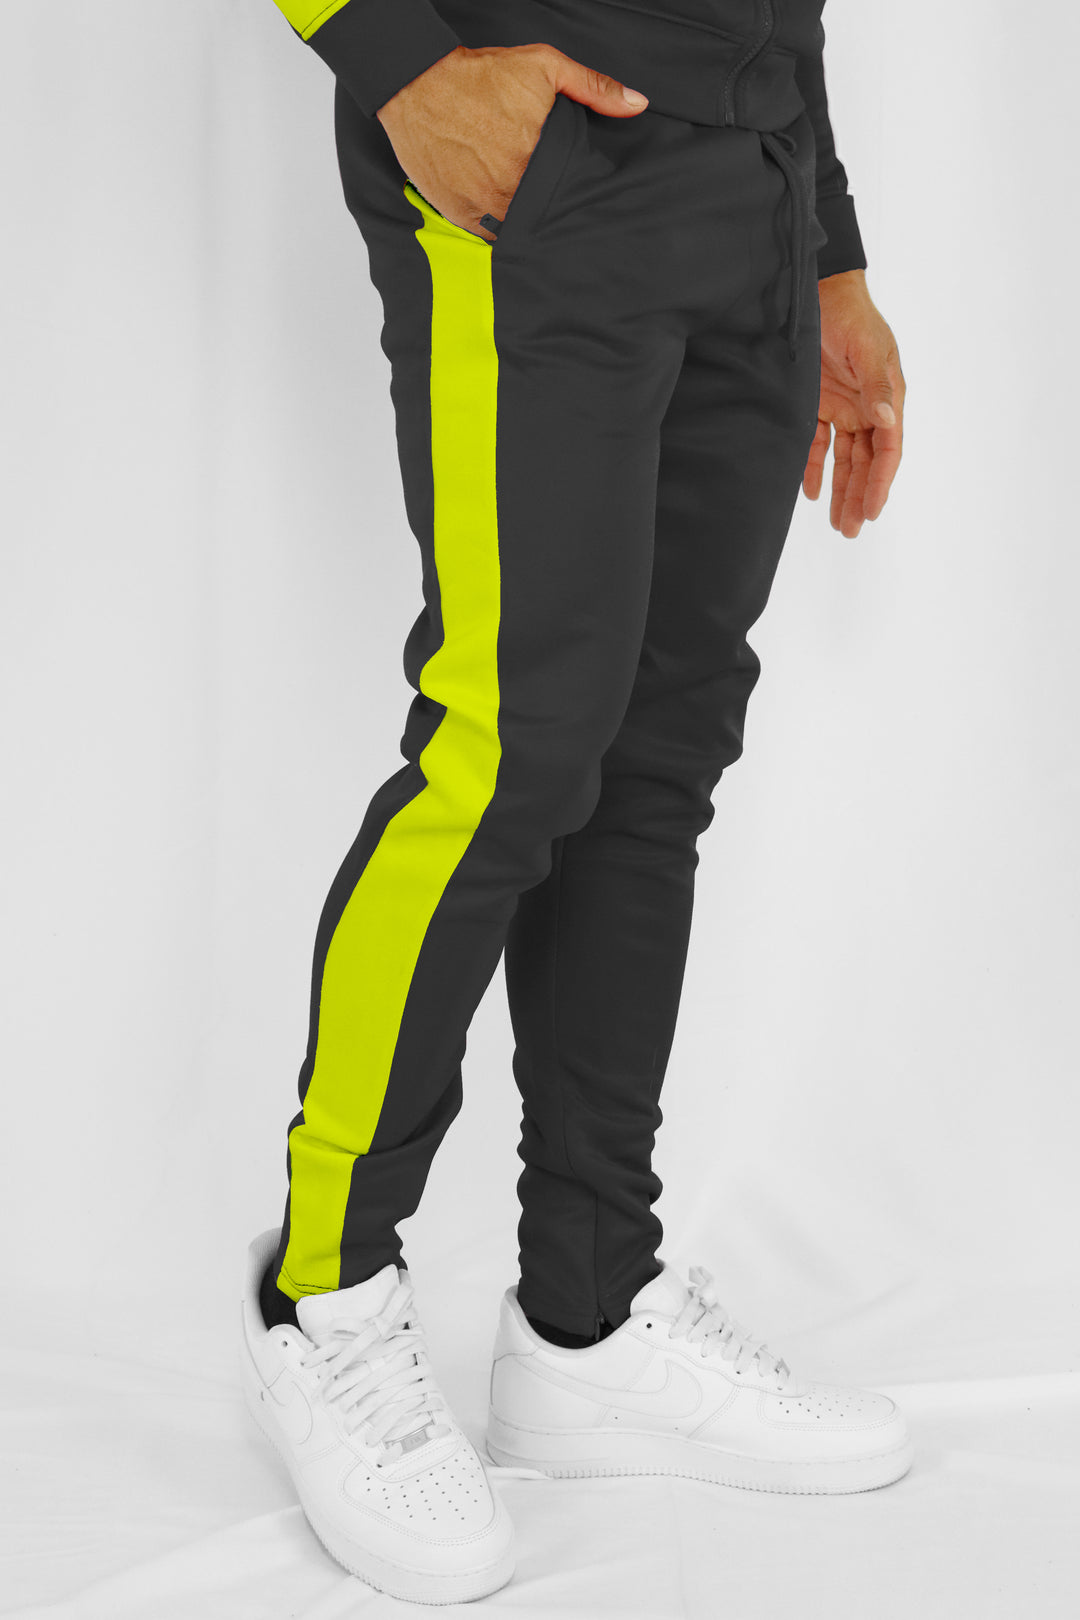 Solid One Stripe Track Pants (Black - Lime) (100-402) - Zamage